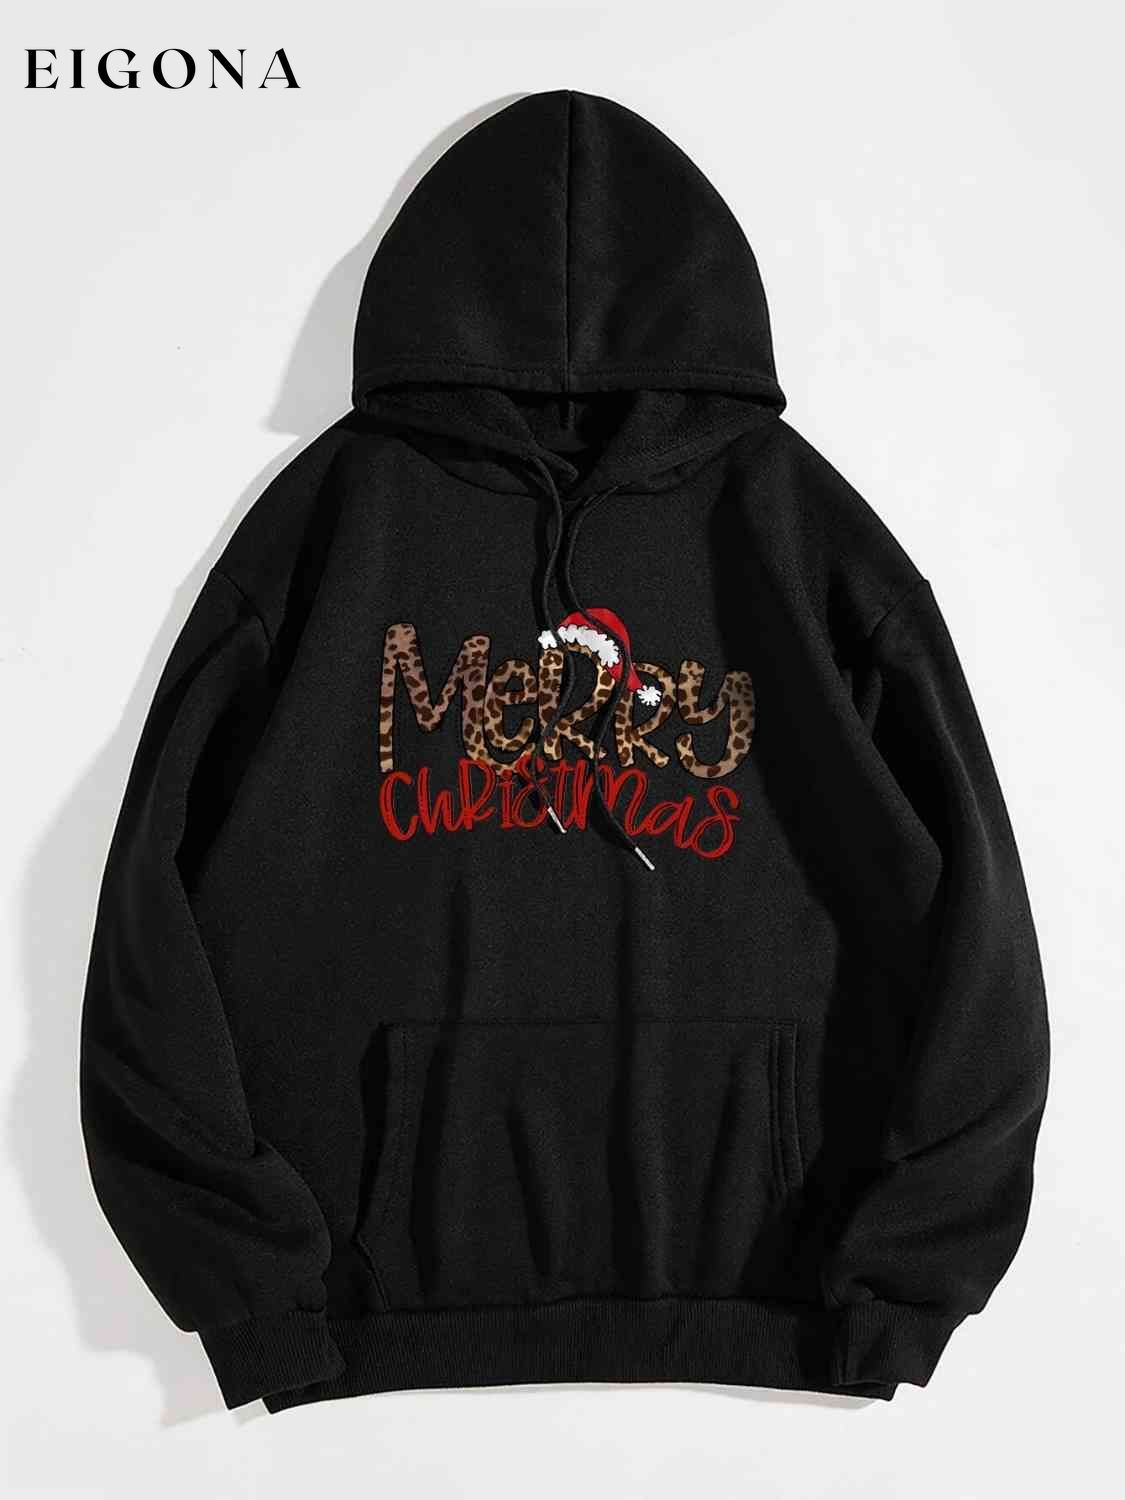 MERRY CHRISTMAS Graphic Drawstring Hoodie Black Christmas christmas sweater clothes E@M@E Ship From Overseas